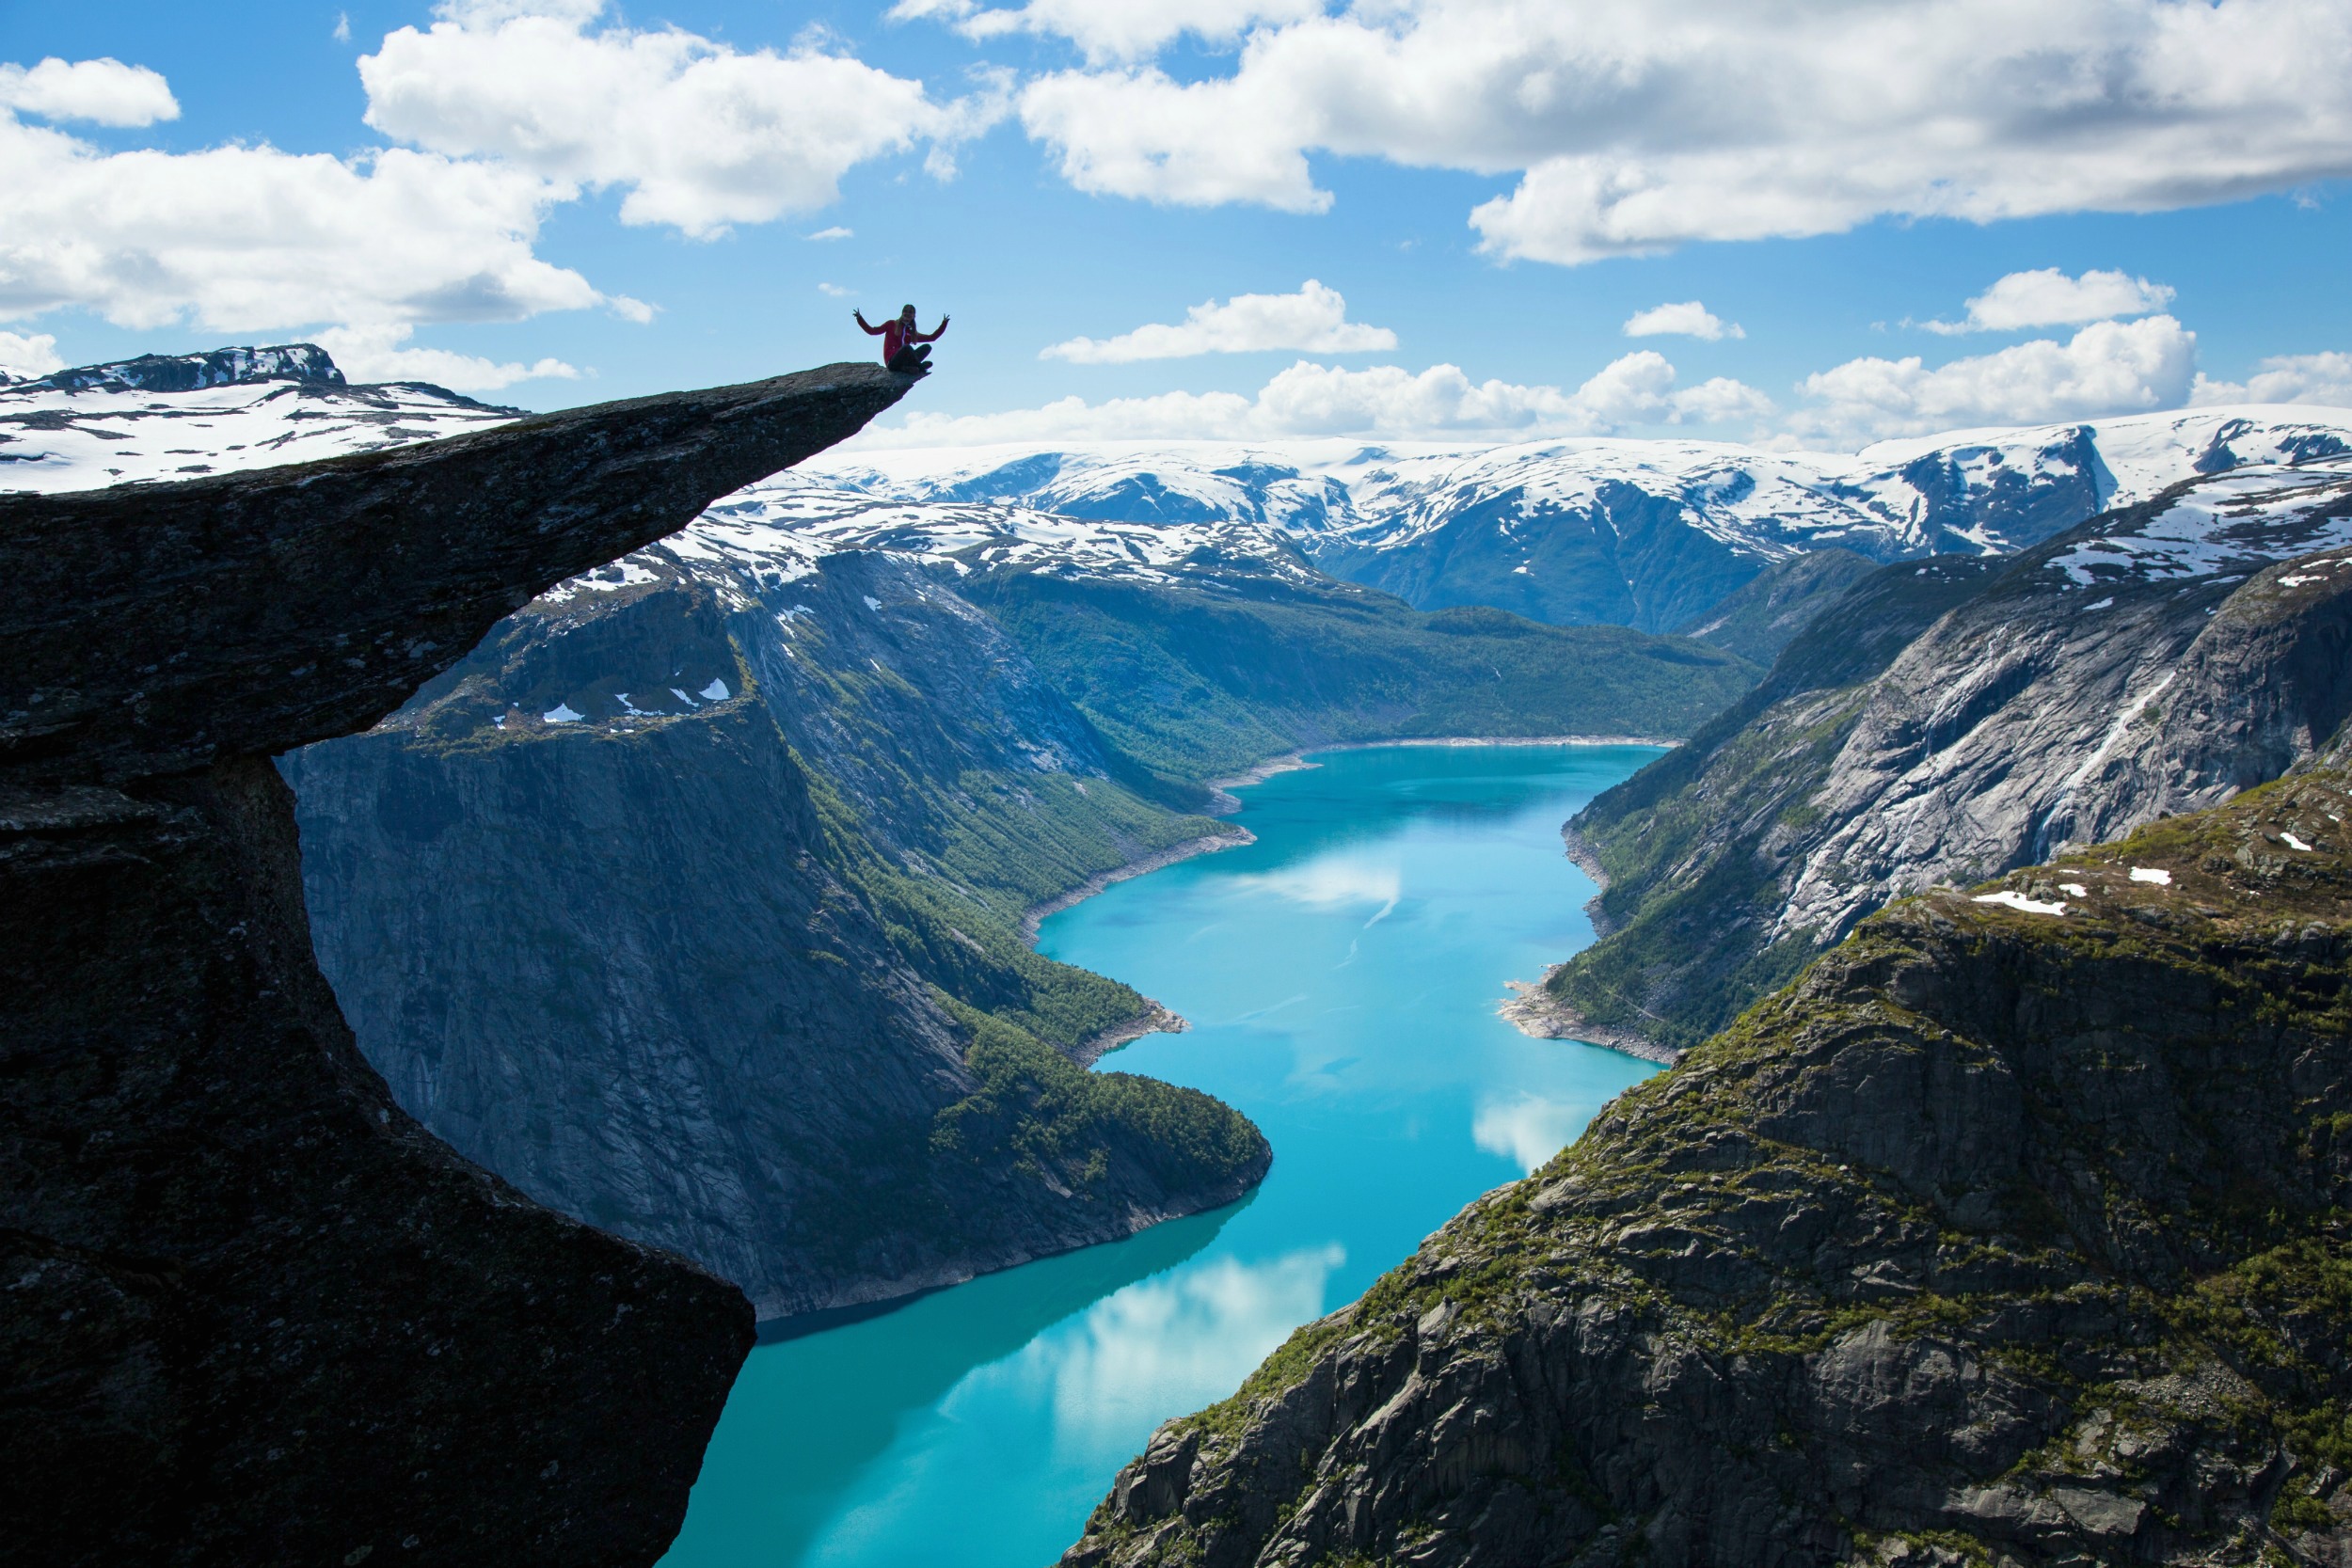 The wonderful Norwegian fjords